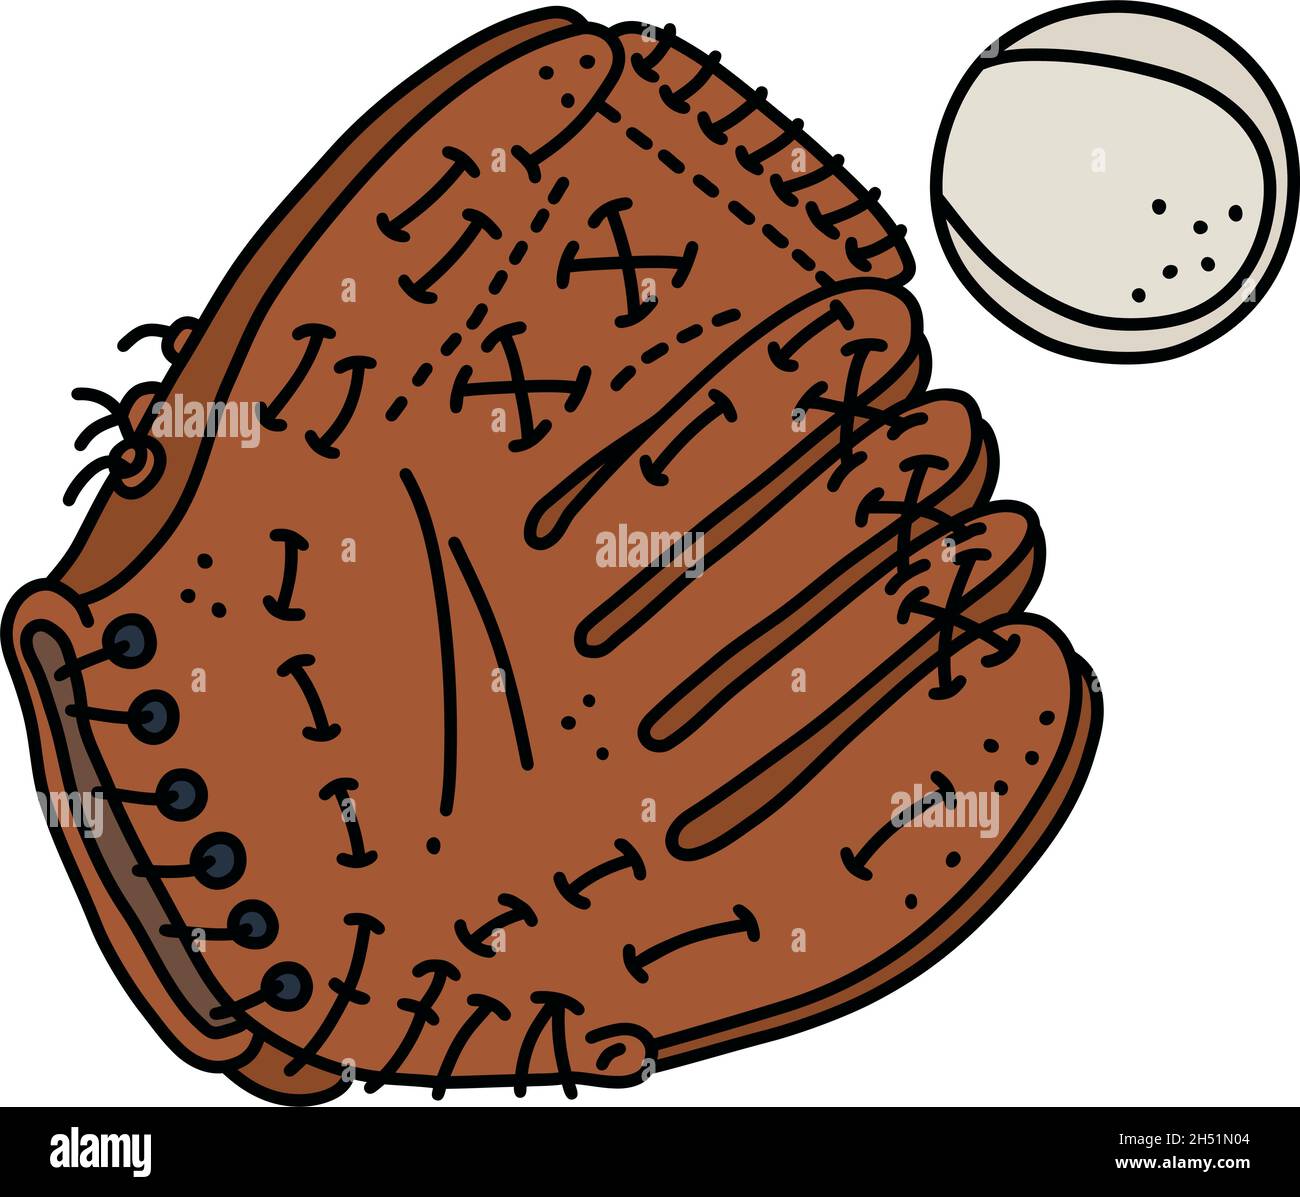 baseball glove and ball drawing